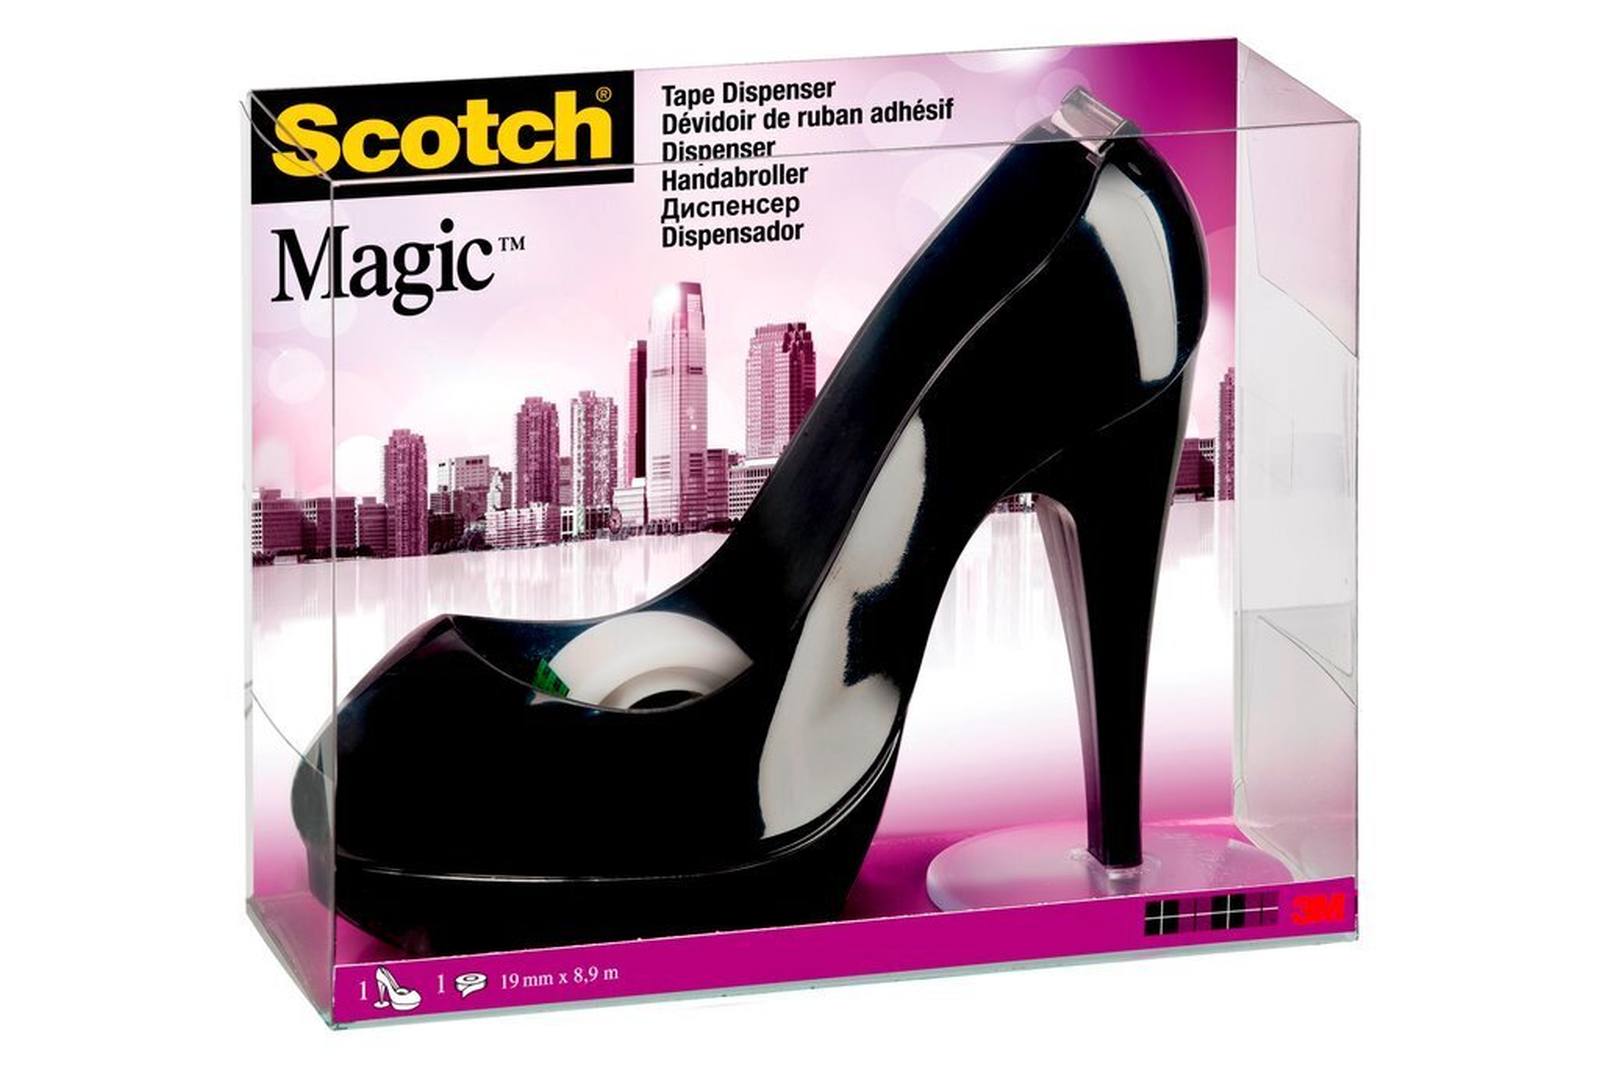 3M Black shoe-shaped hand dispenser incl. 1 roll of Scotch Magic adhesive tape, 19 mm x 8.9 m